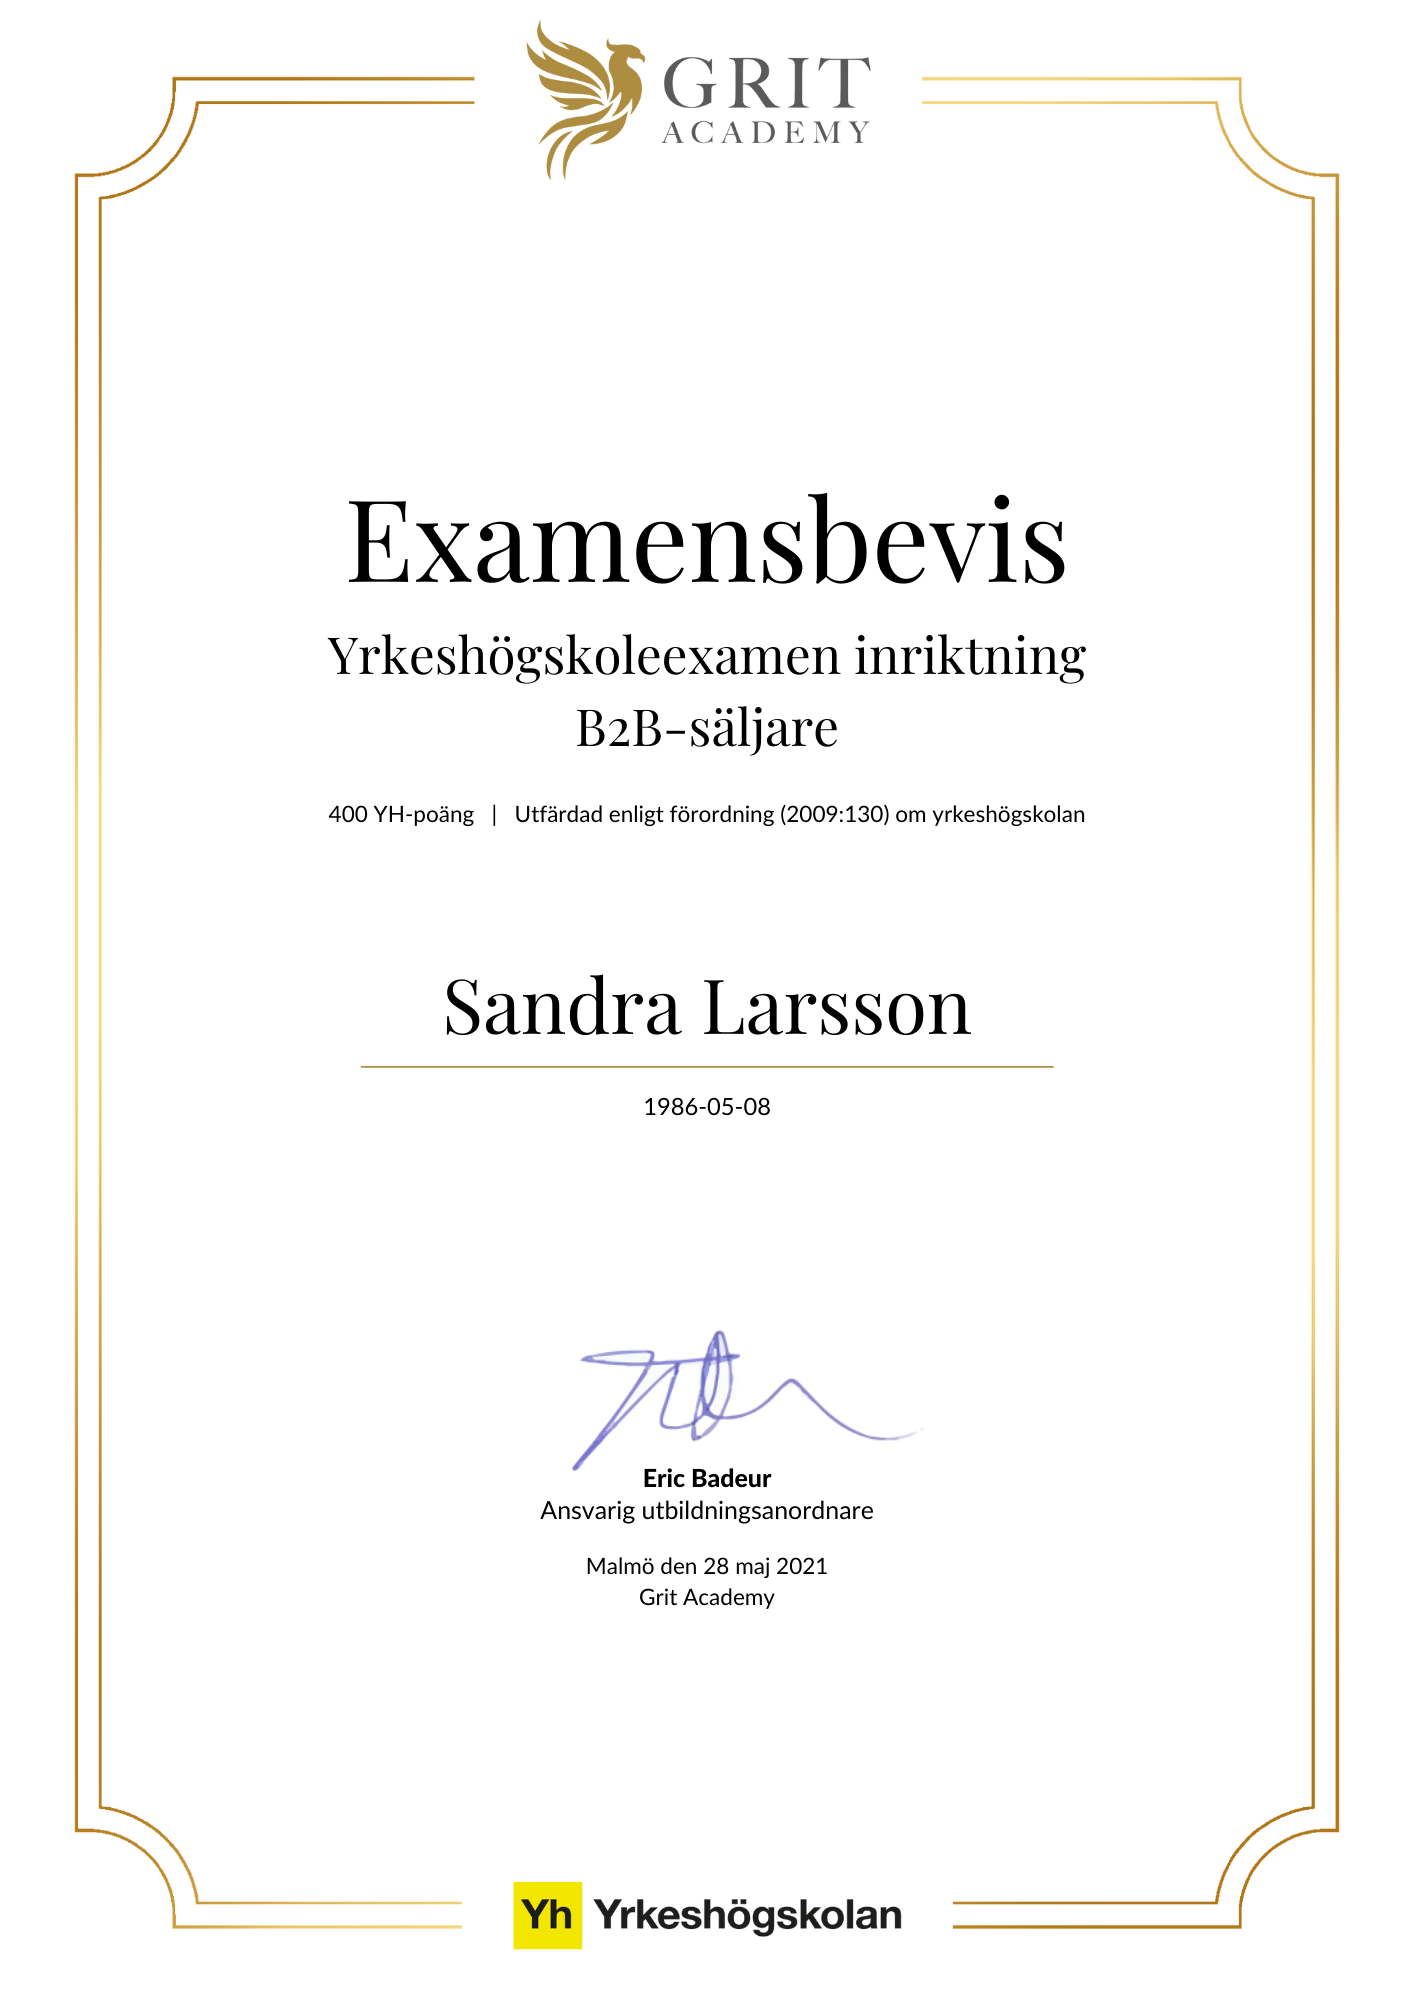 Examensbevis Sandra Larsson - 1